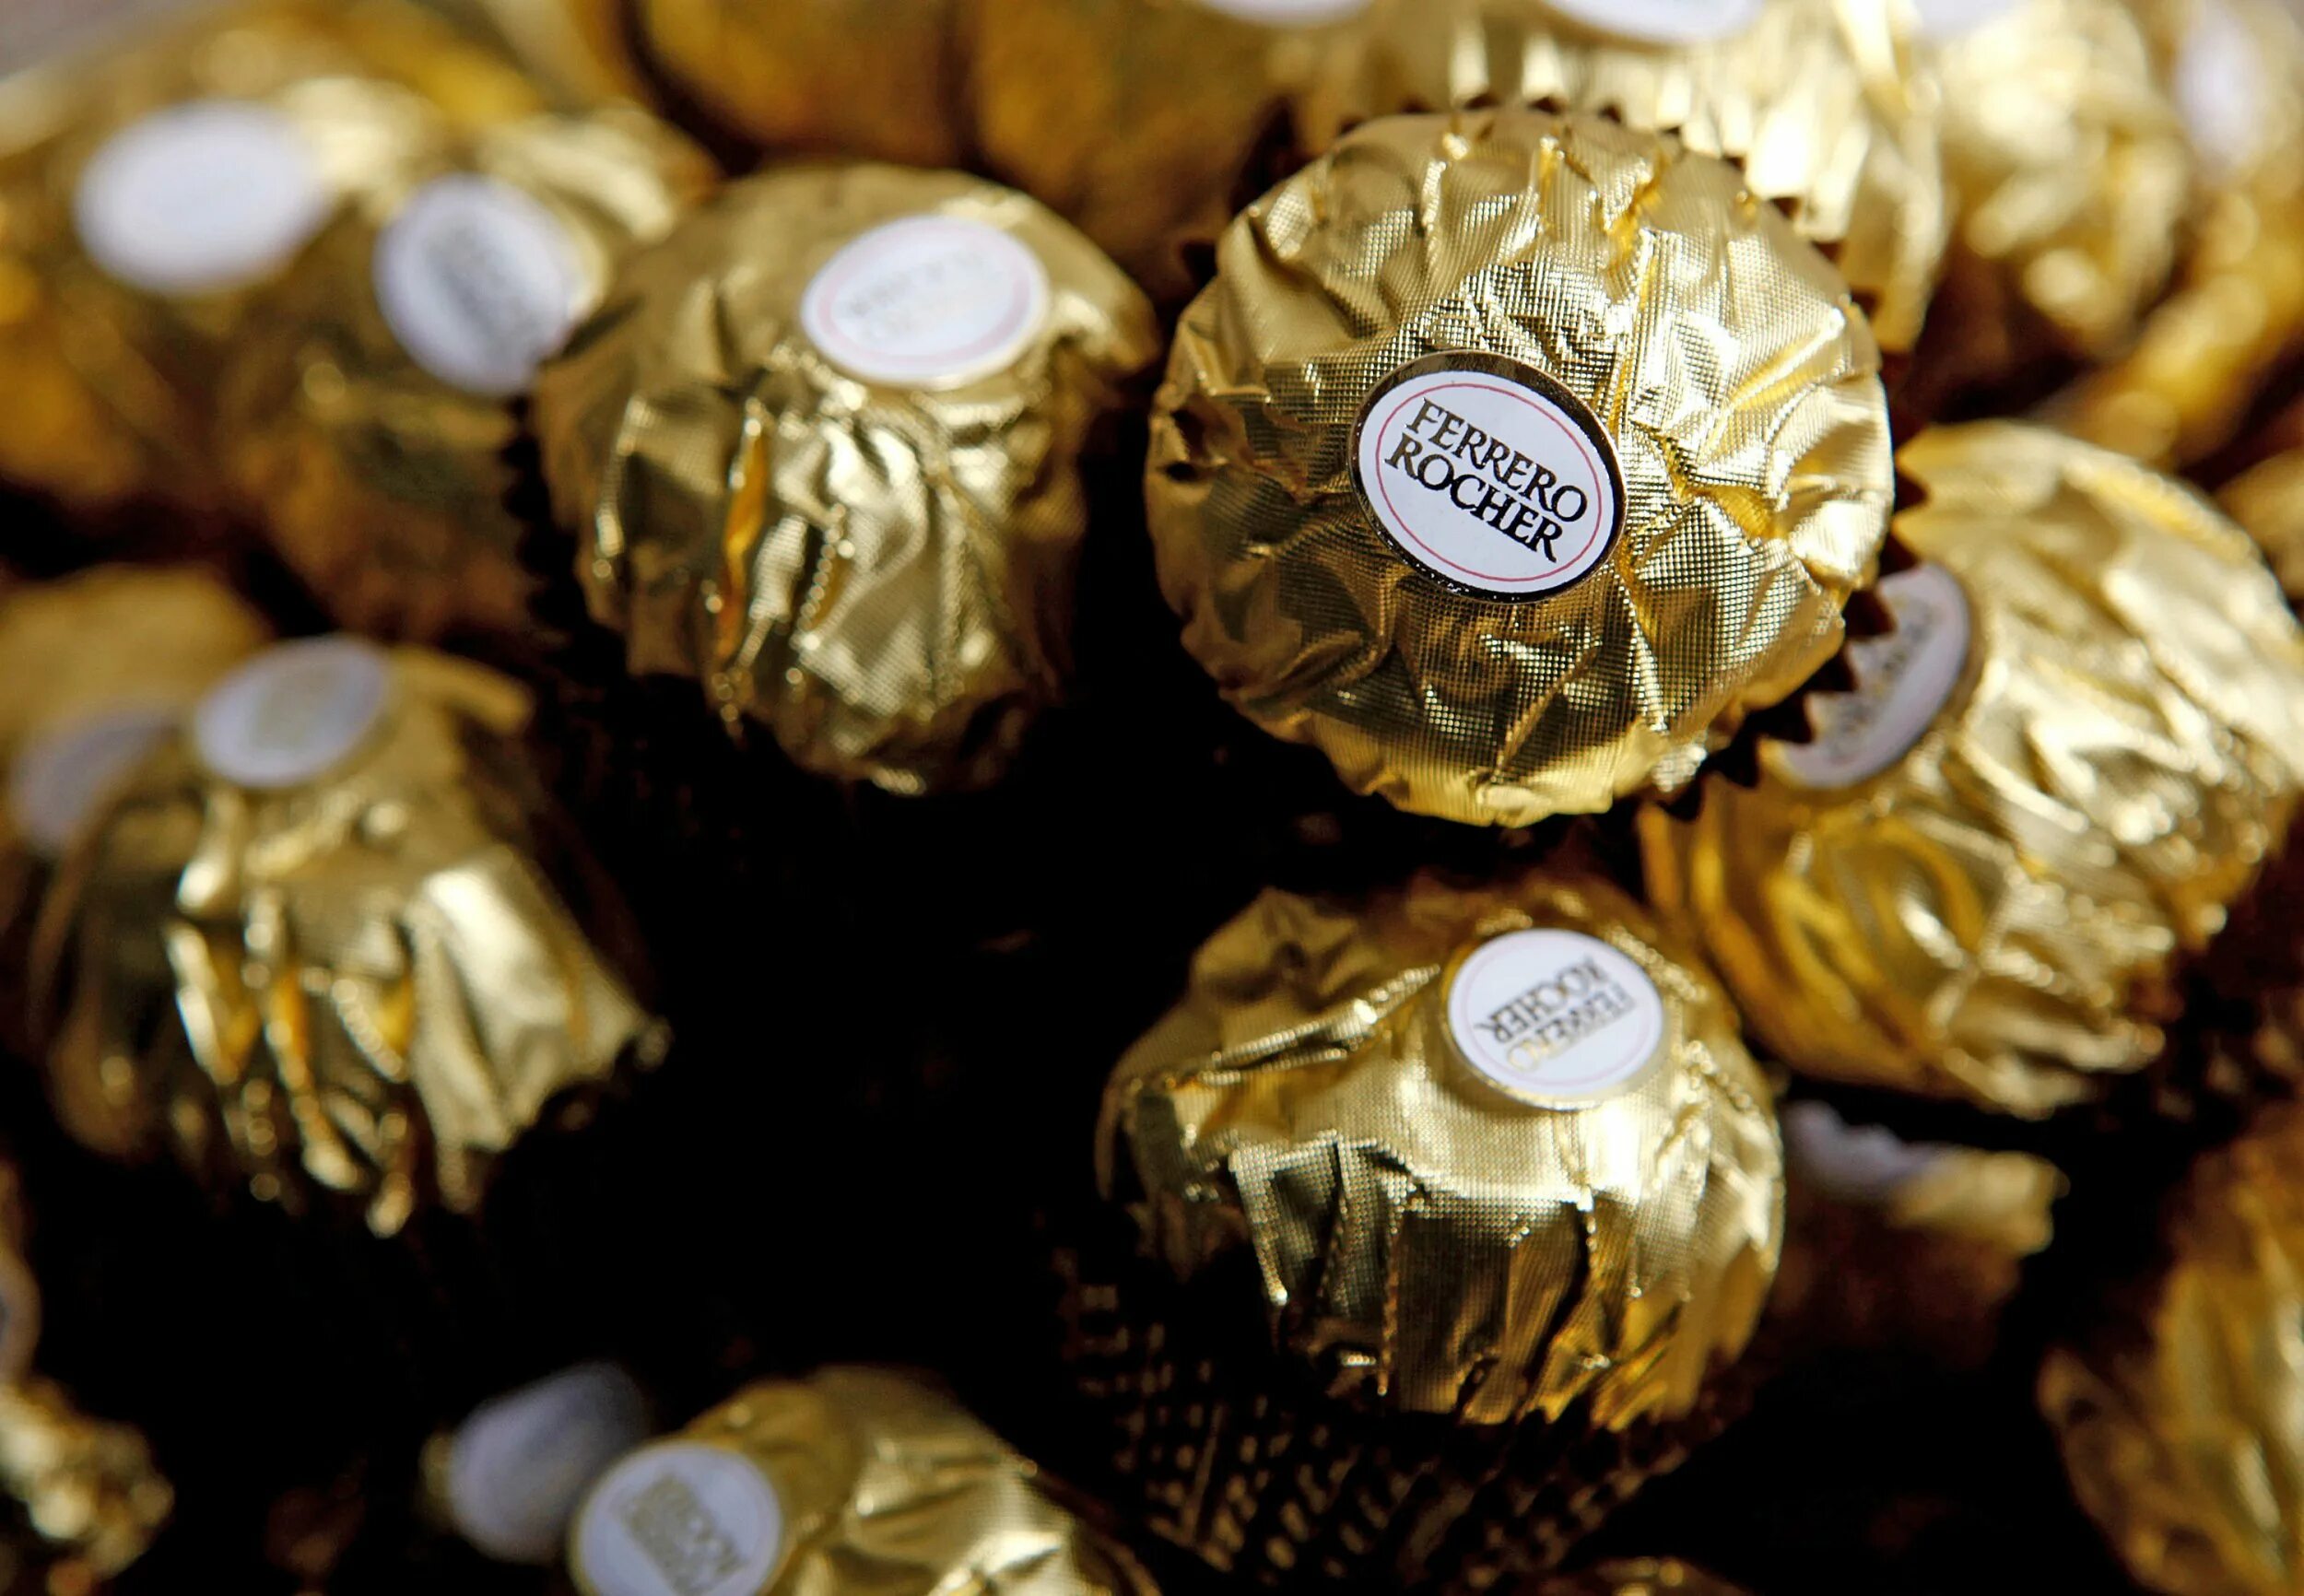 Ферреро Роше. Шоколад Ферреро Роше. Ferrero Rocher шоколад. Ферреро Роше Эстетика.